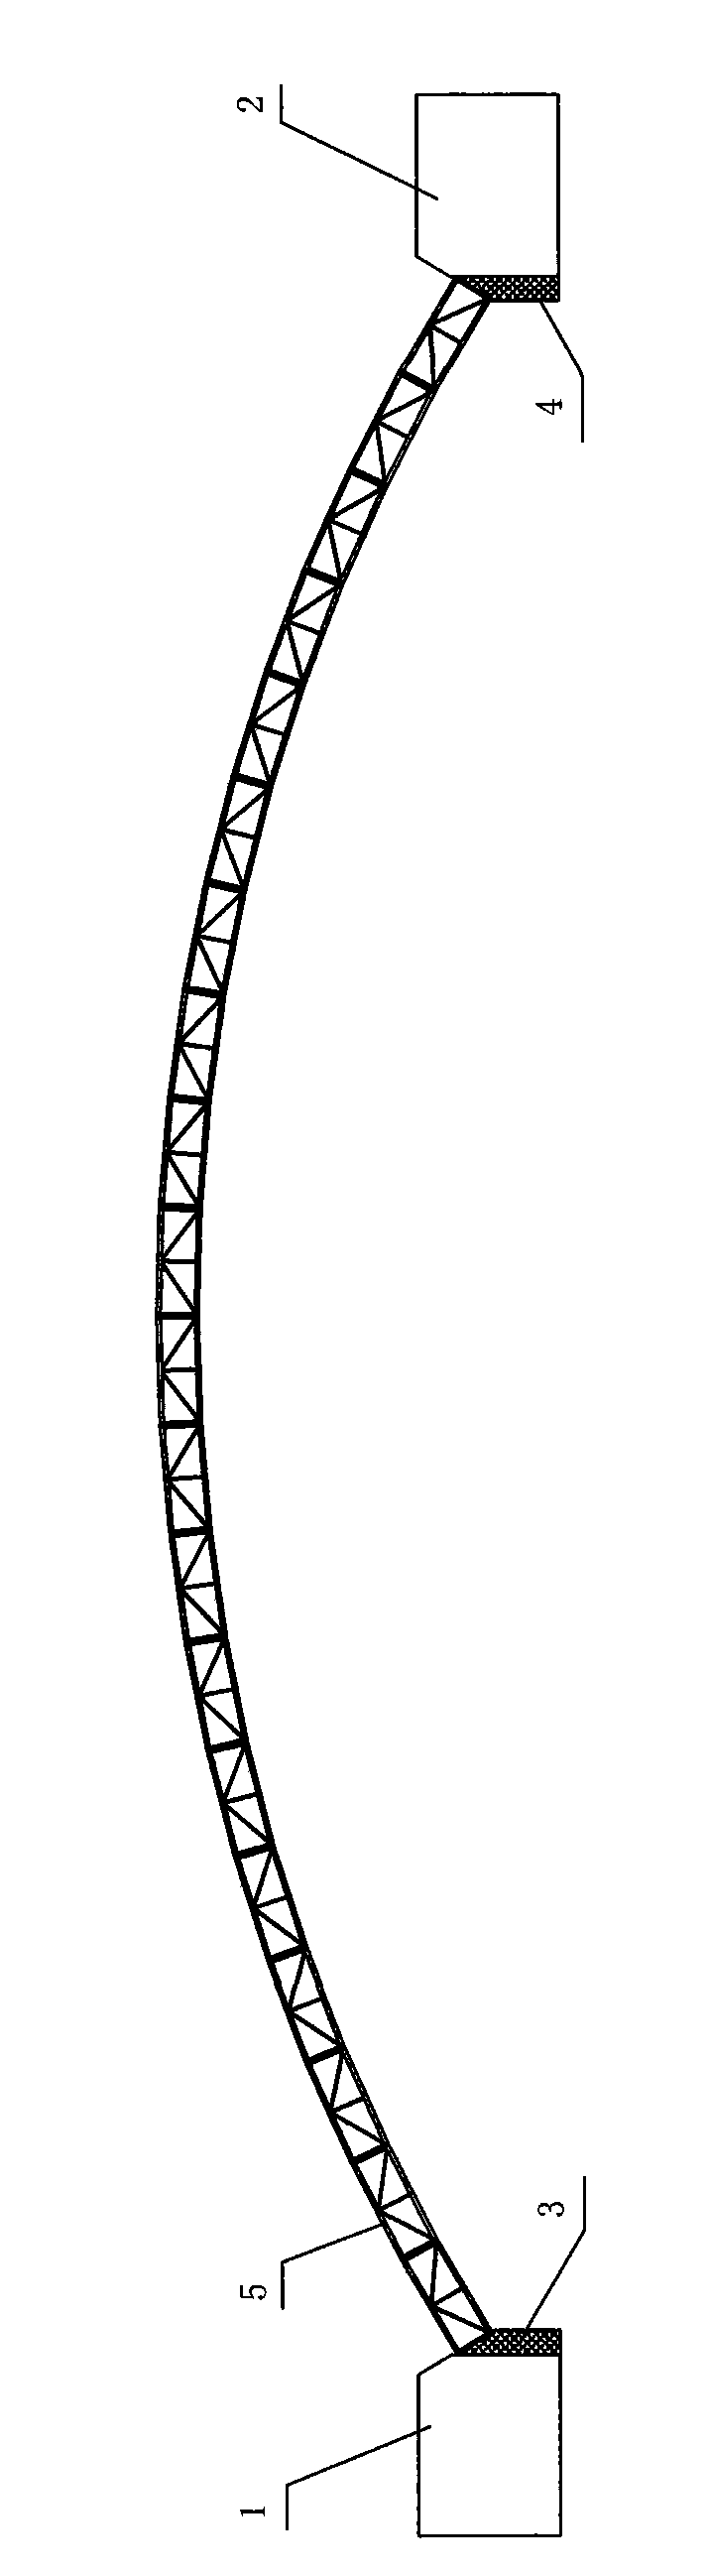 Large-span steel truss arch construction method